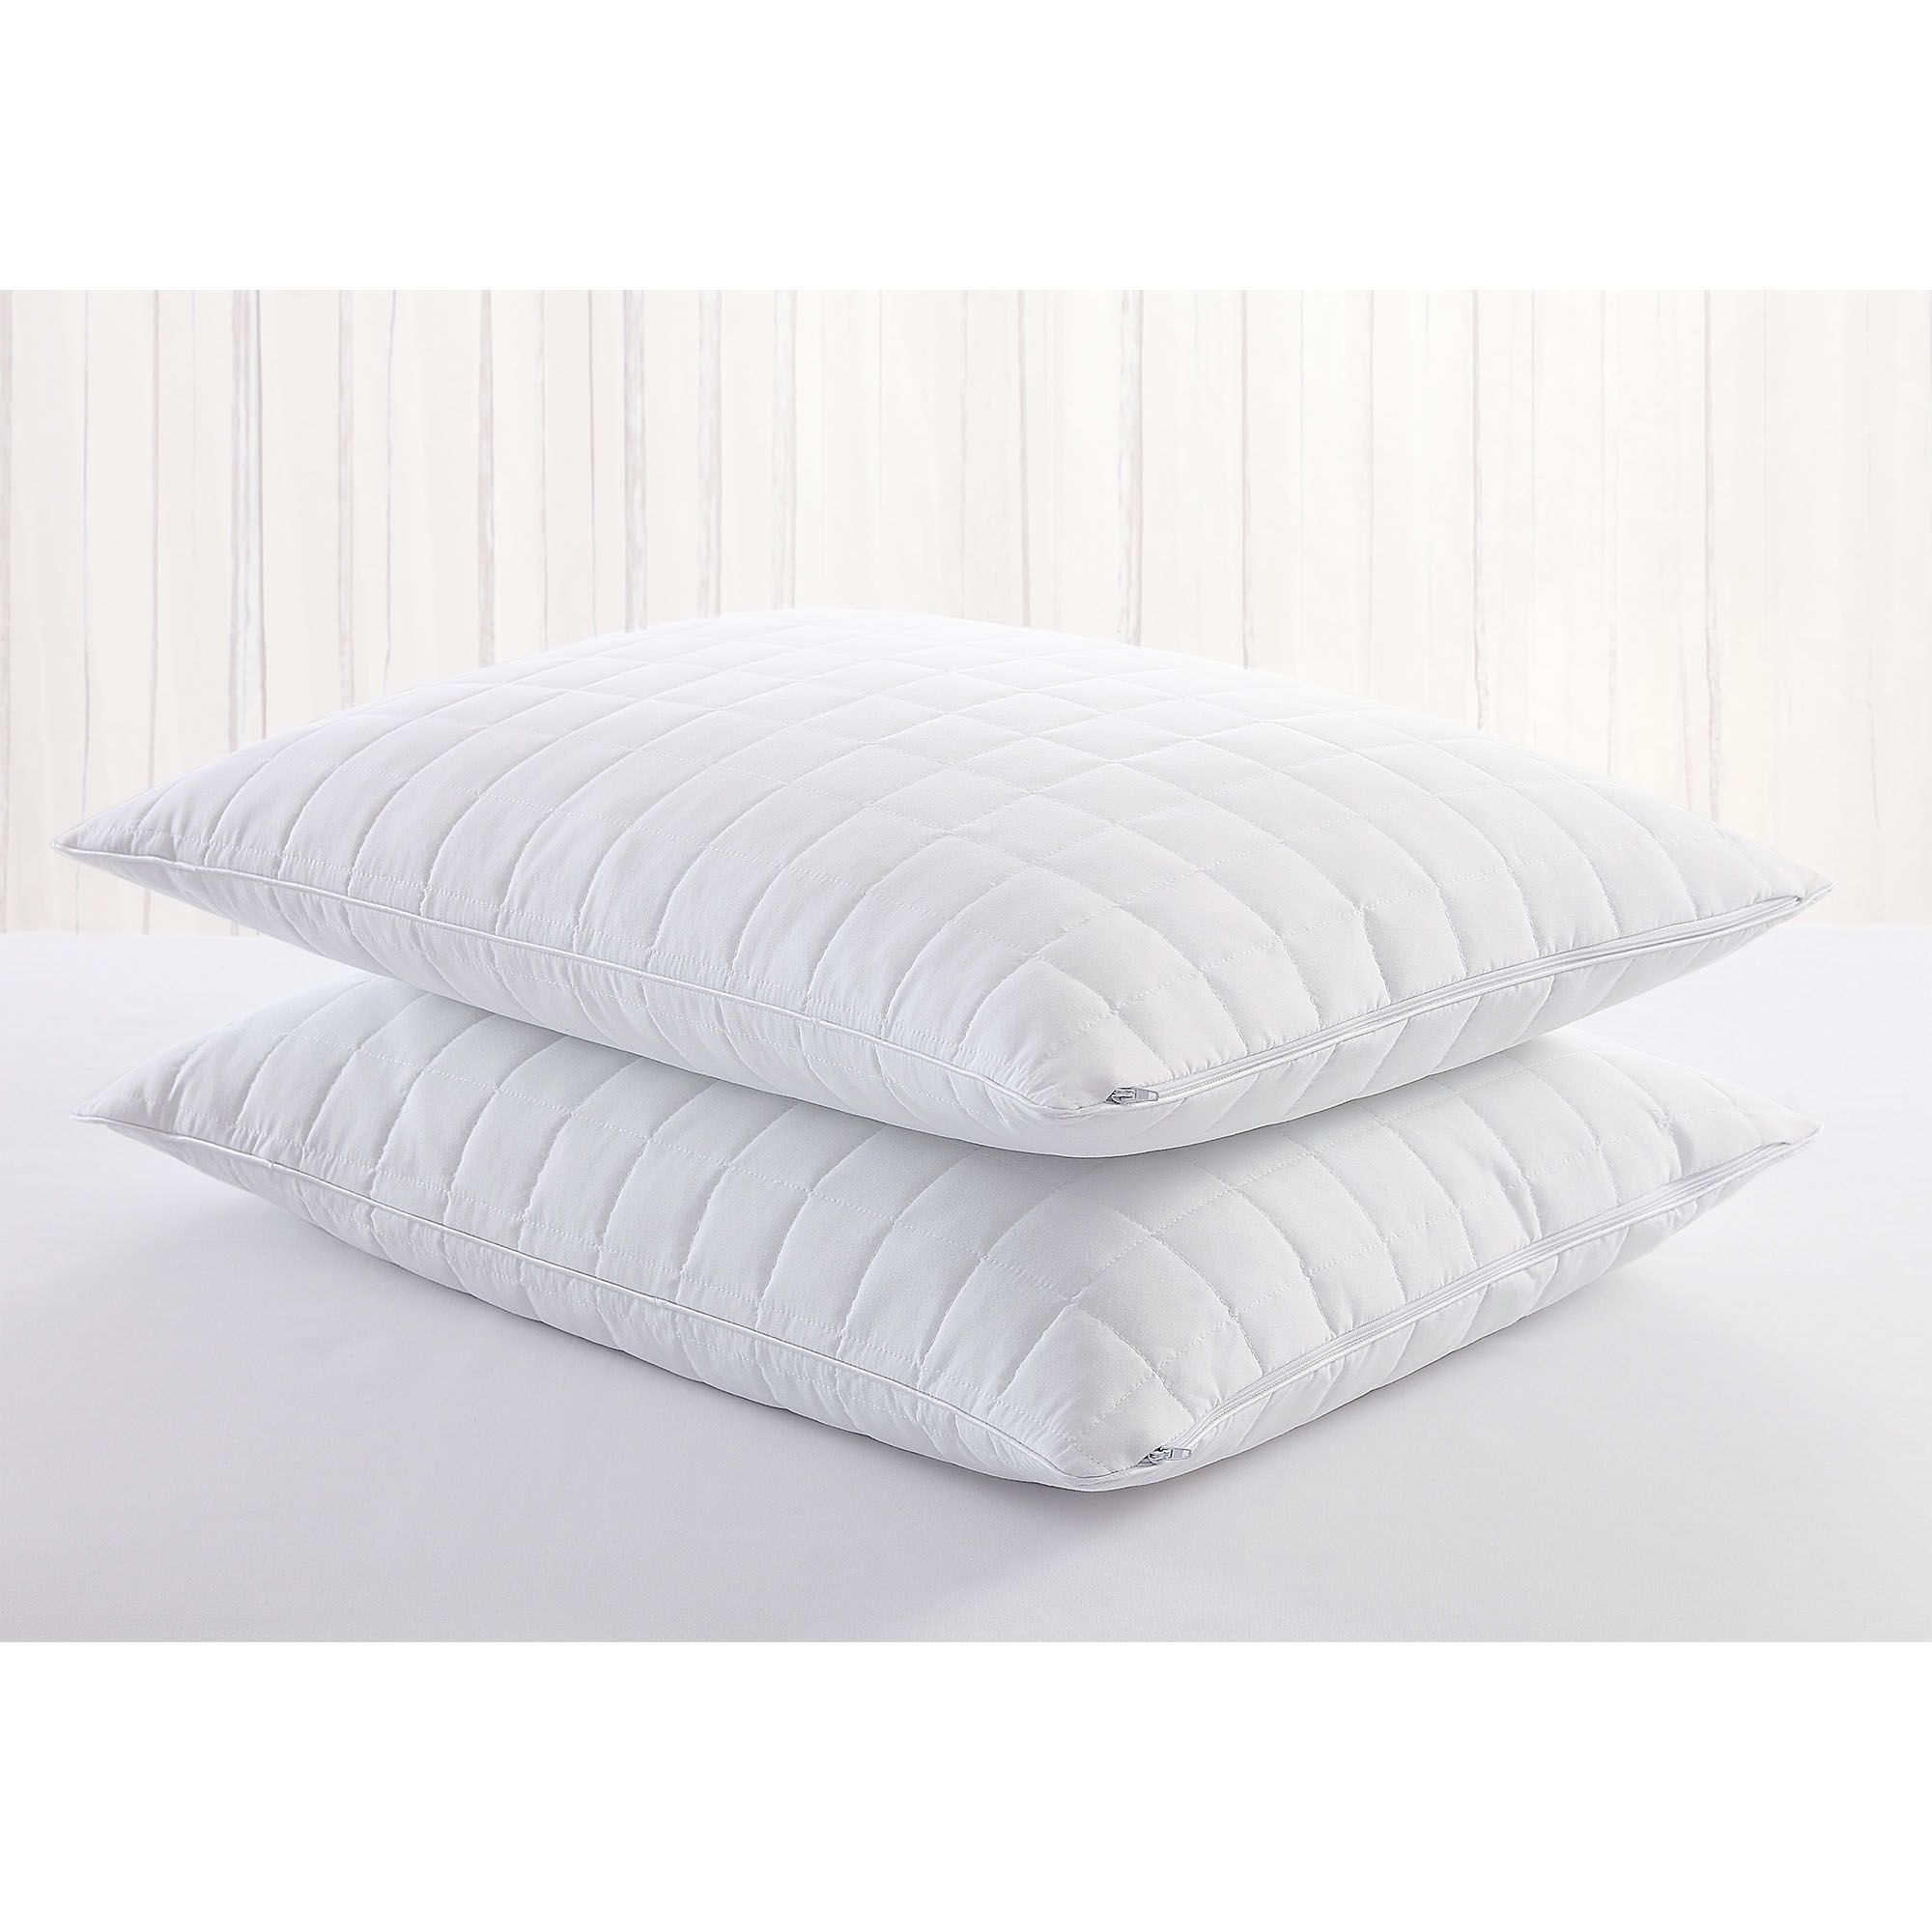 Skil-Care Bariatric Gel-Foam Pad Cushions